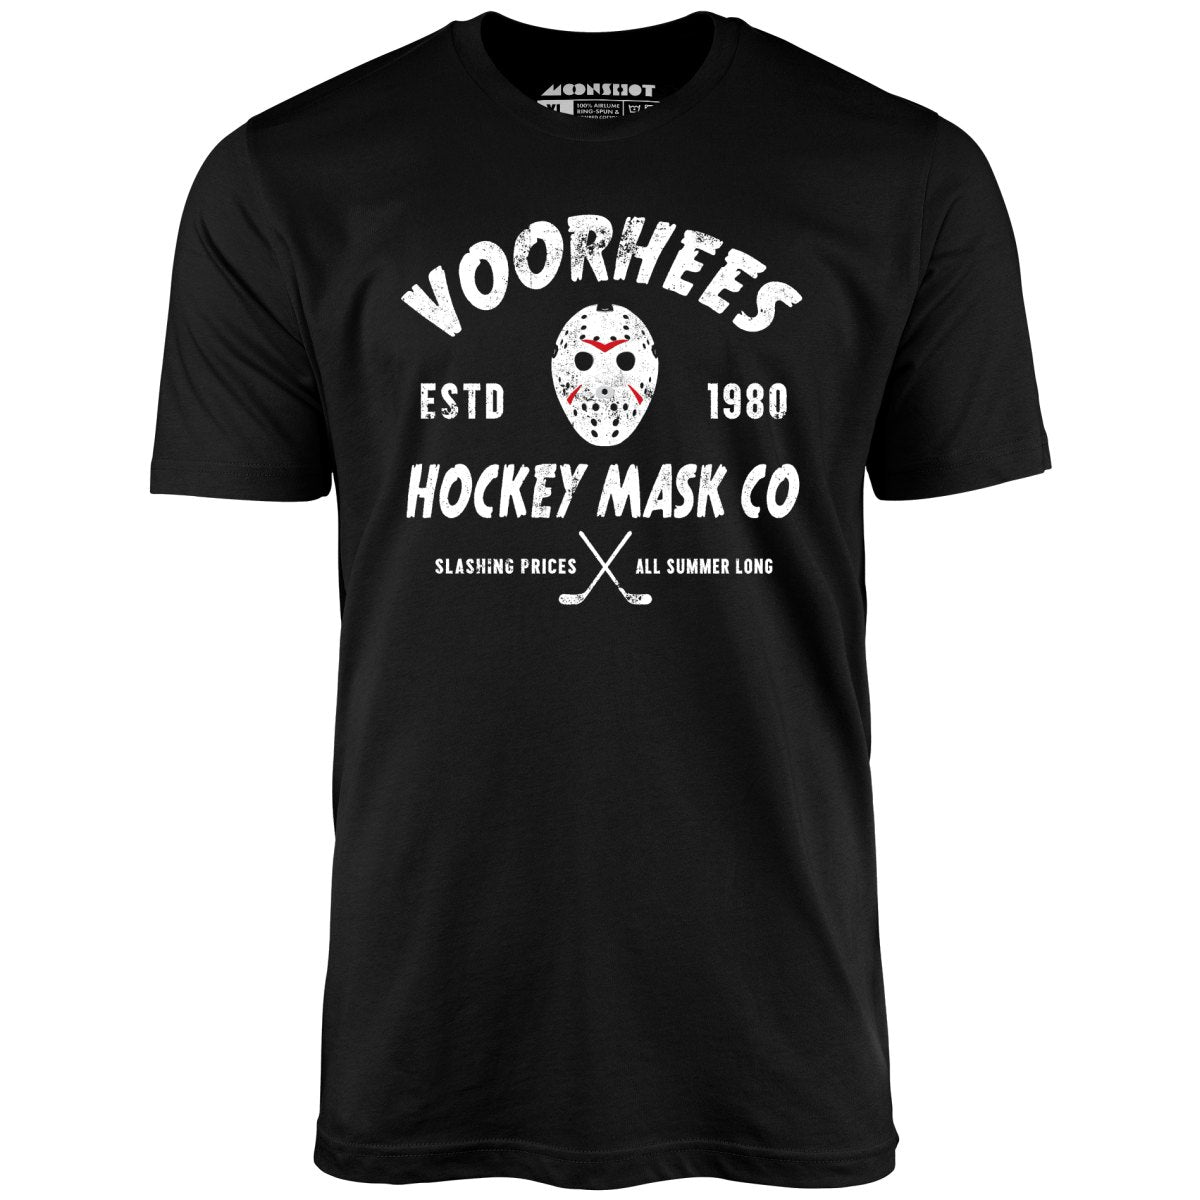 Voorhees Hockey Mask Co. - Unisex T-Shirt